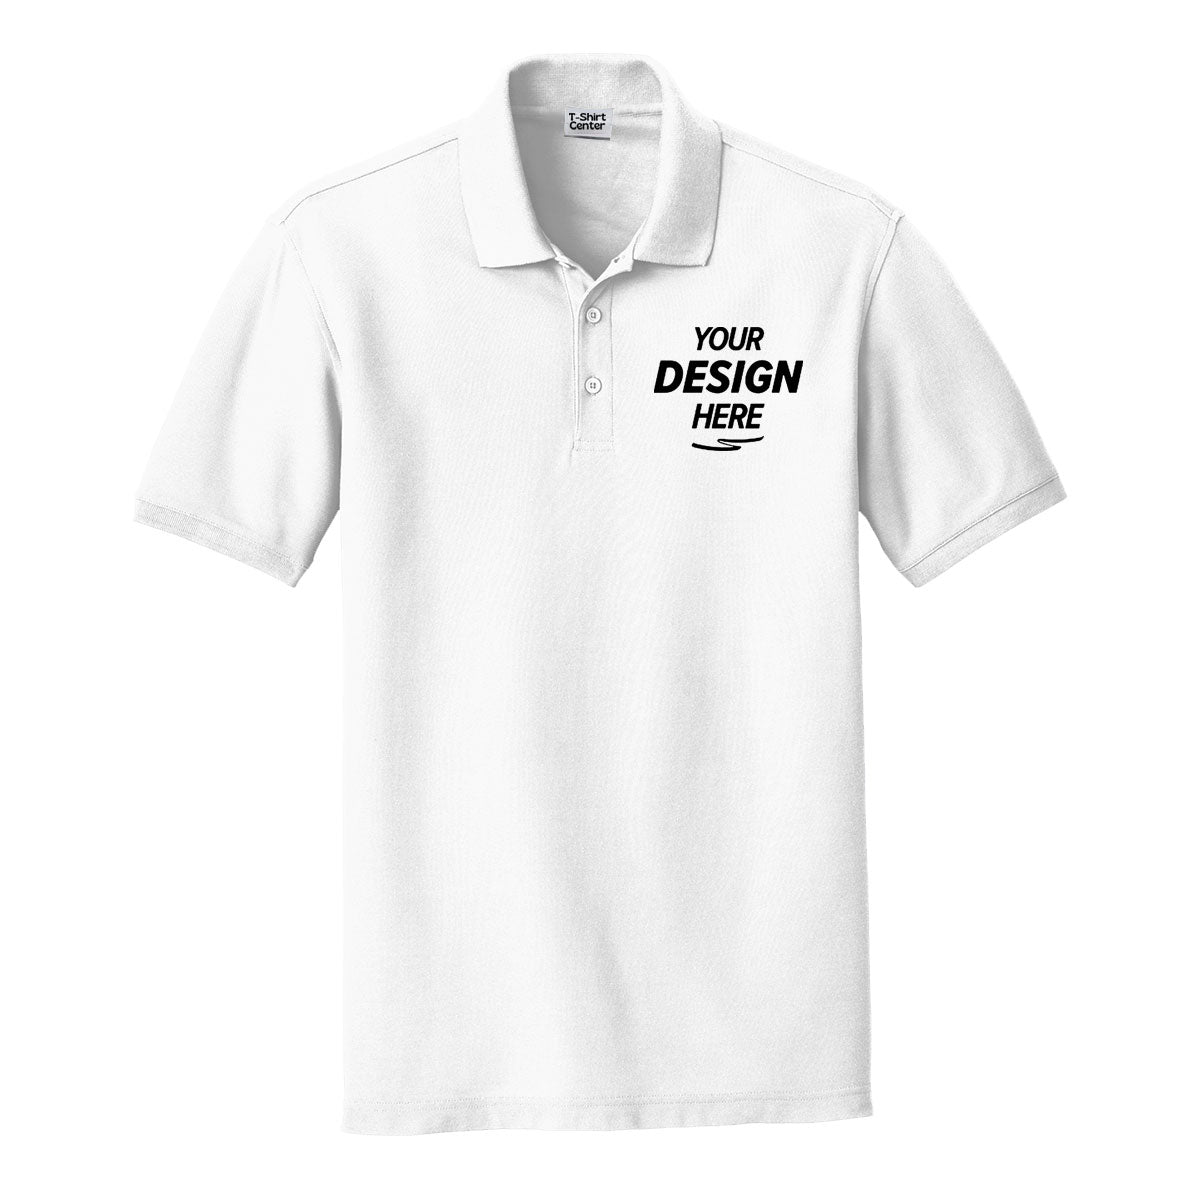 100 Cotton Polo Shirts ($1099) + Free shipping